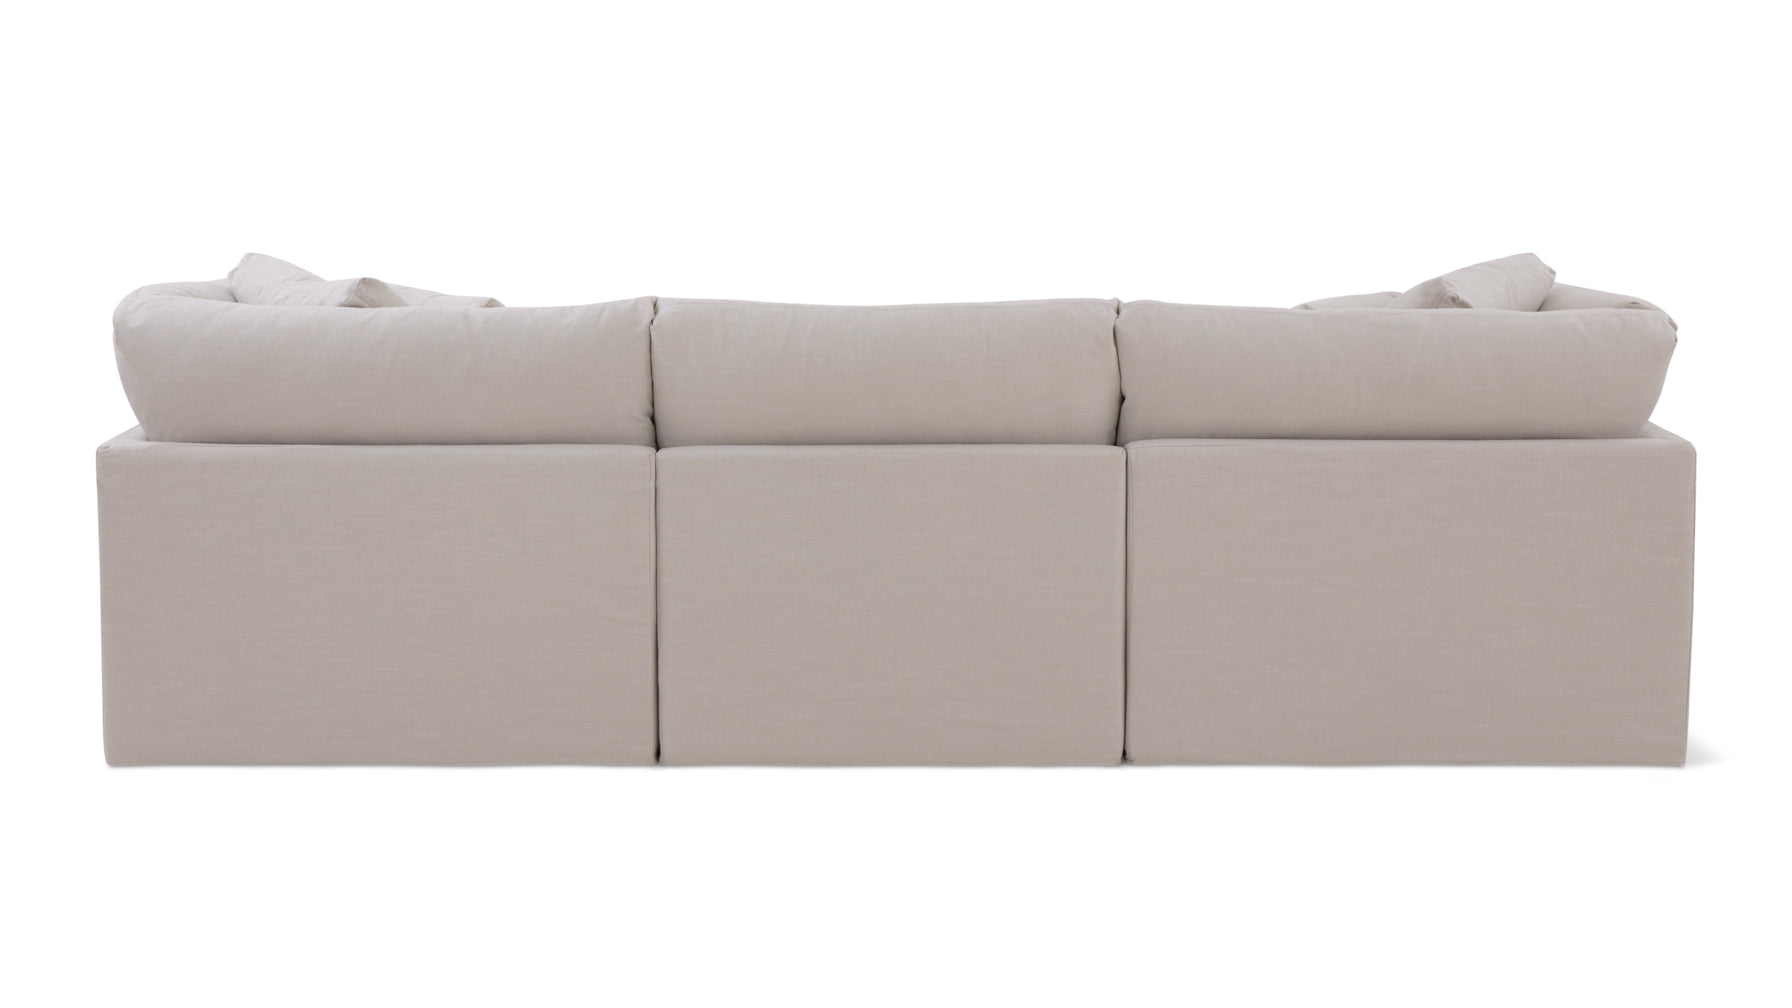 Get Together™ 3-Piece Modular Sofa, Standard, Clay - Image 7